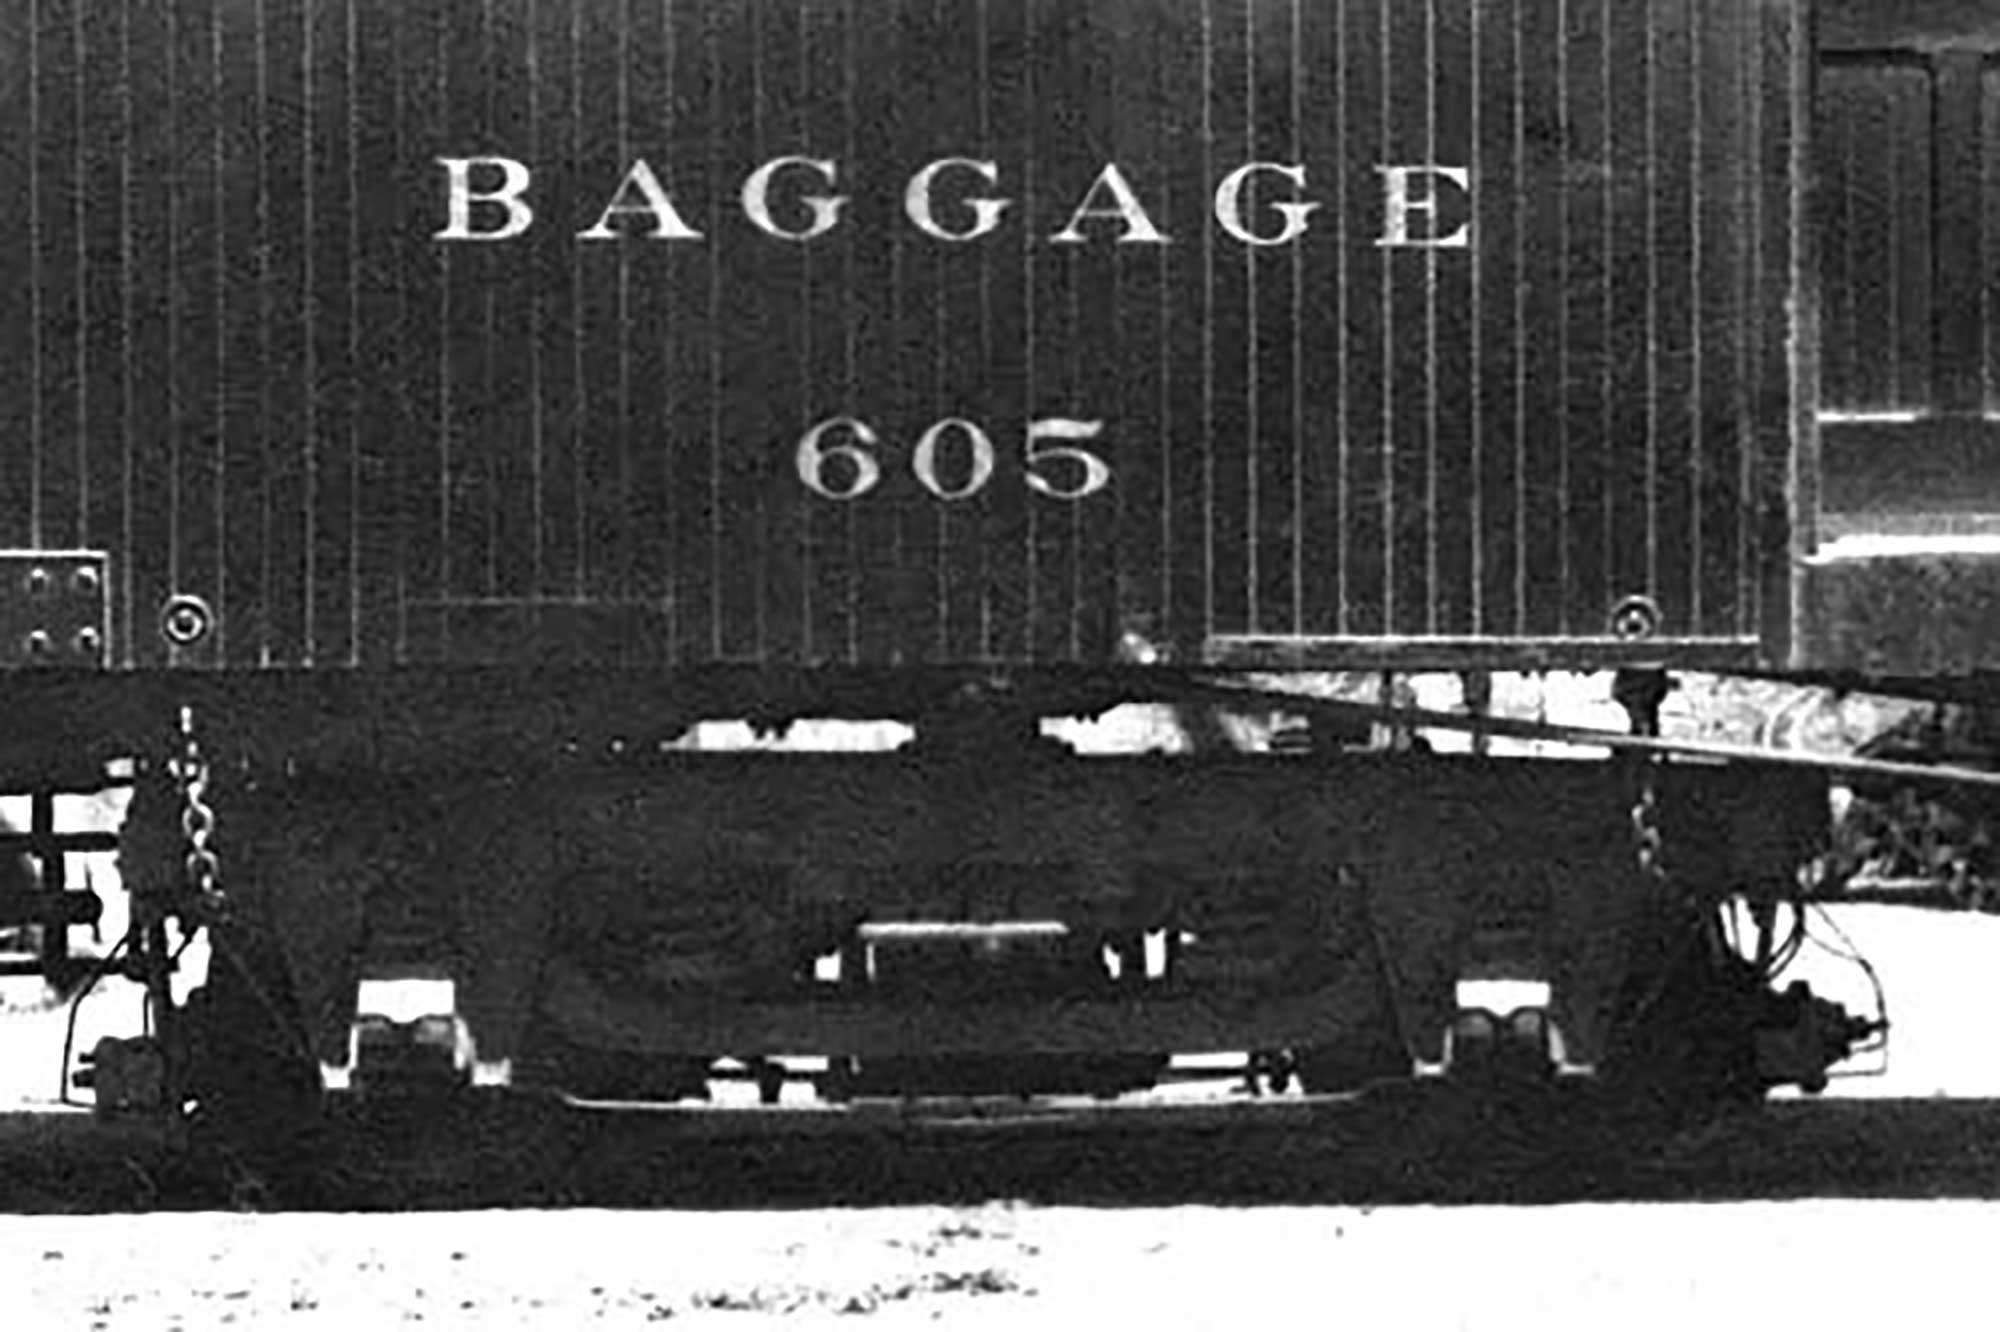 Baggage #605